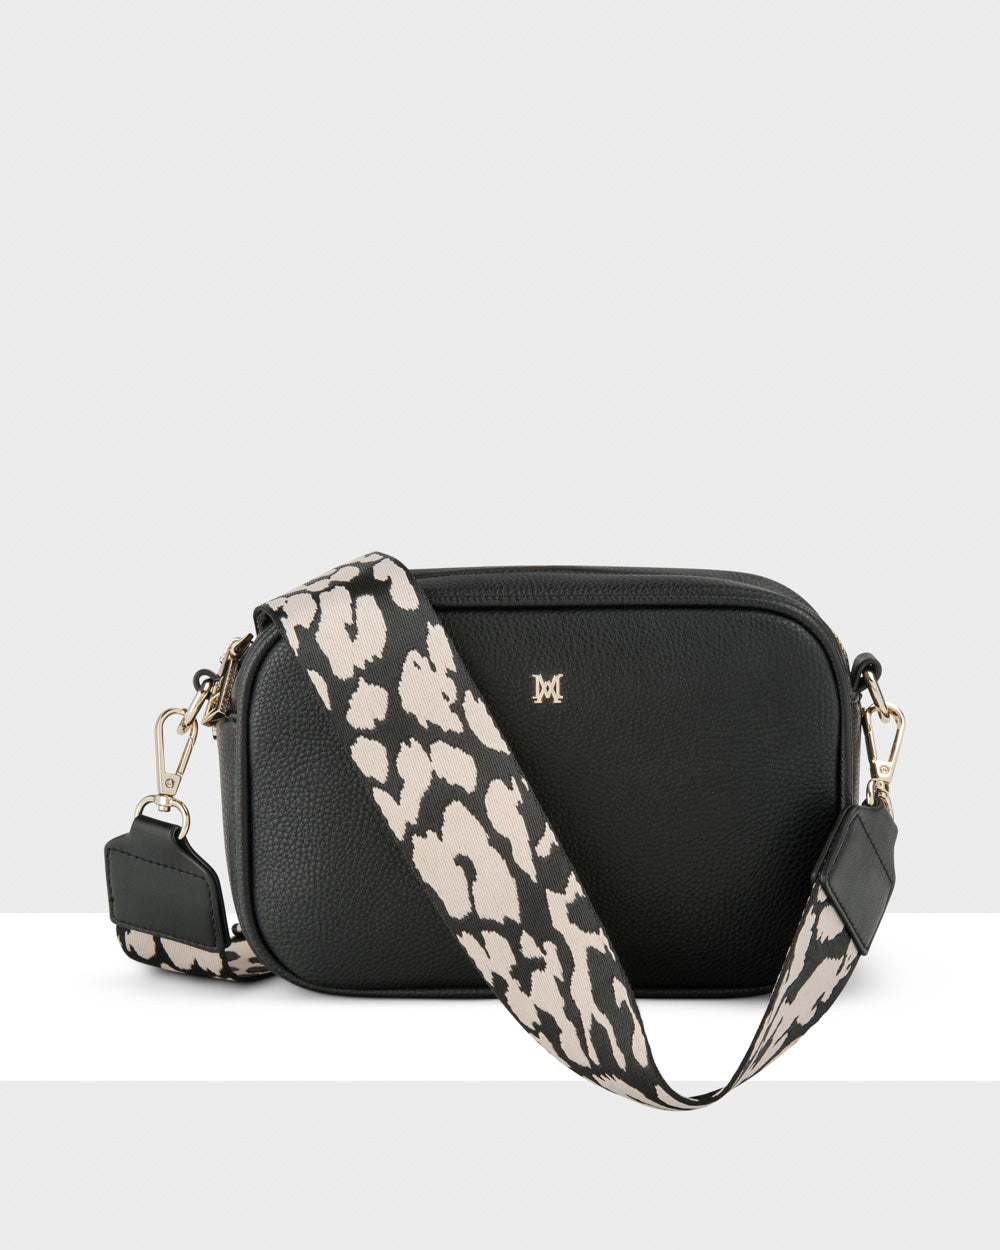 Kate Spade Outlet Madison Mini Camera Bag, Black - Handbags & Purses